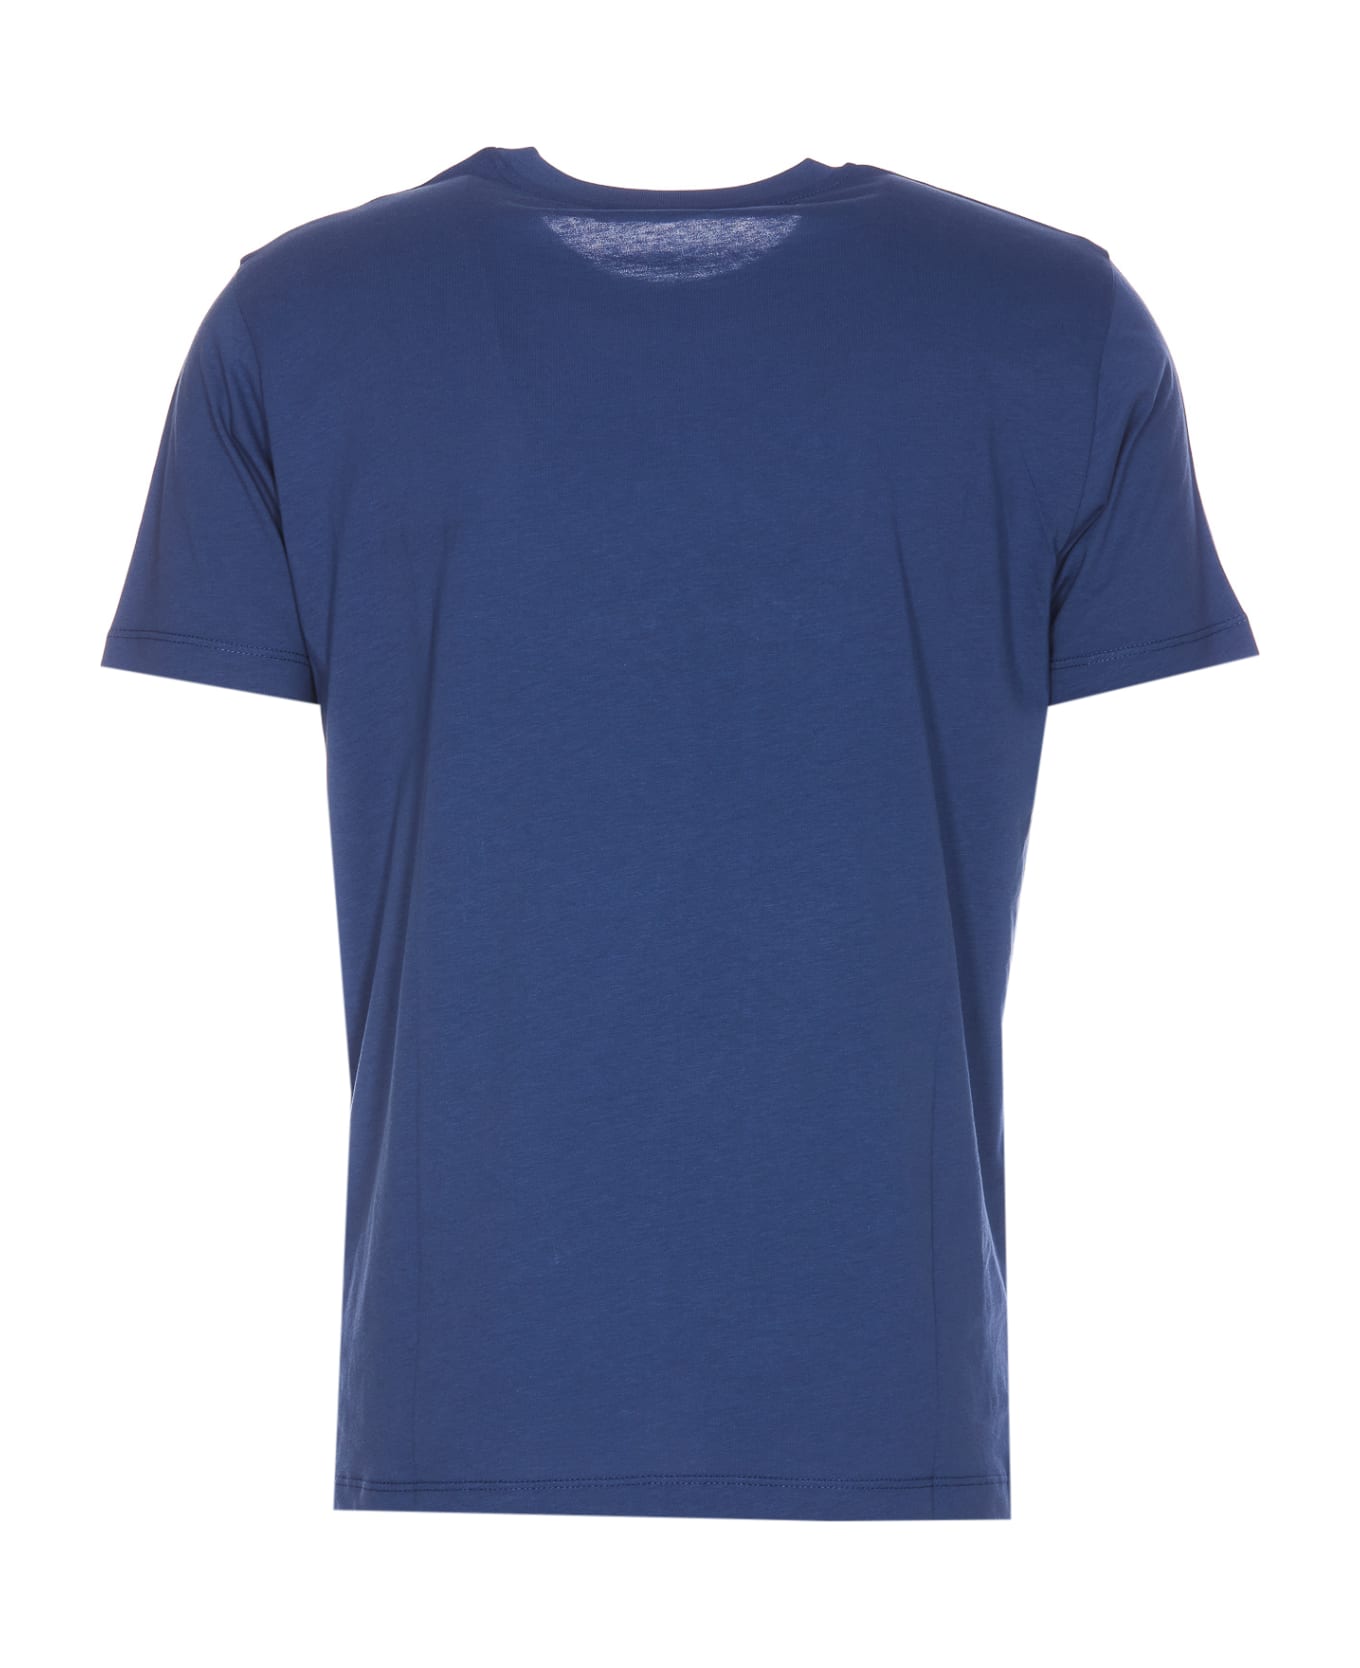 Vilebrequin T-shirt Tortue Flockee - blu